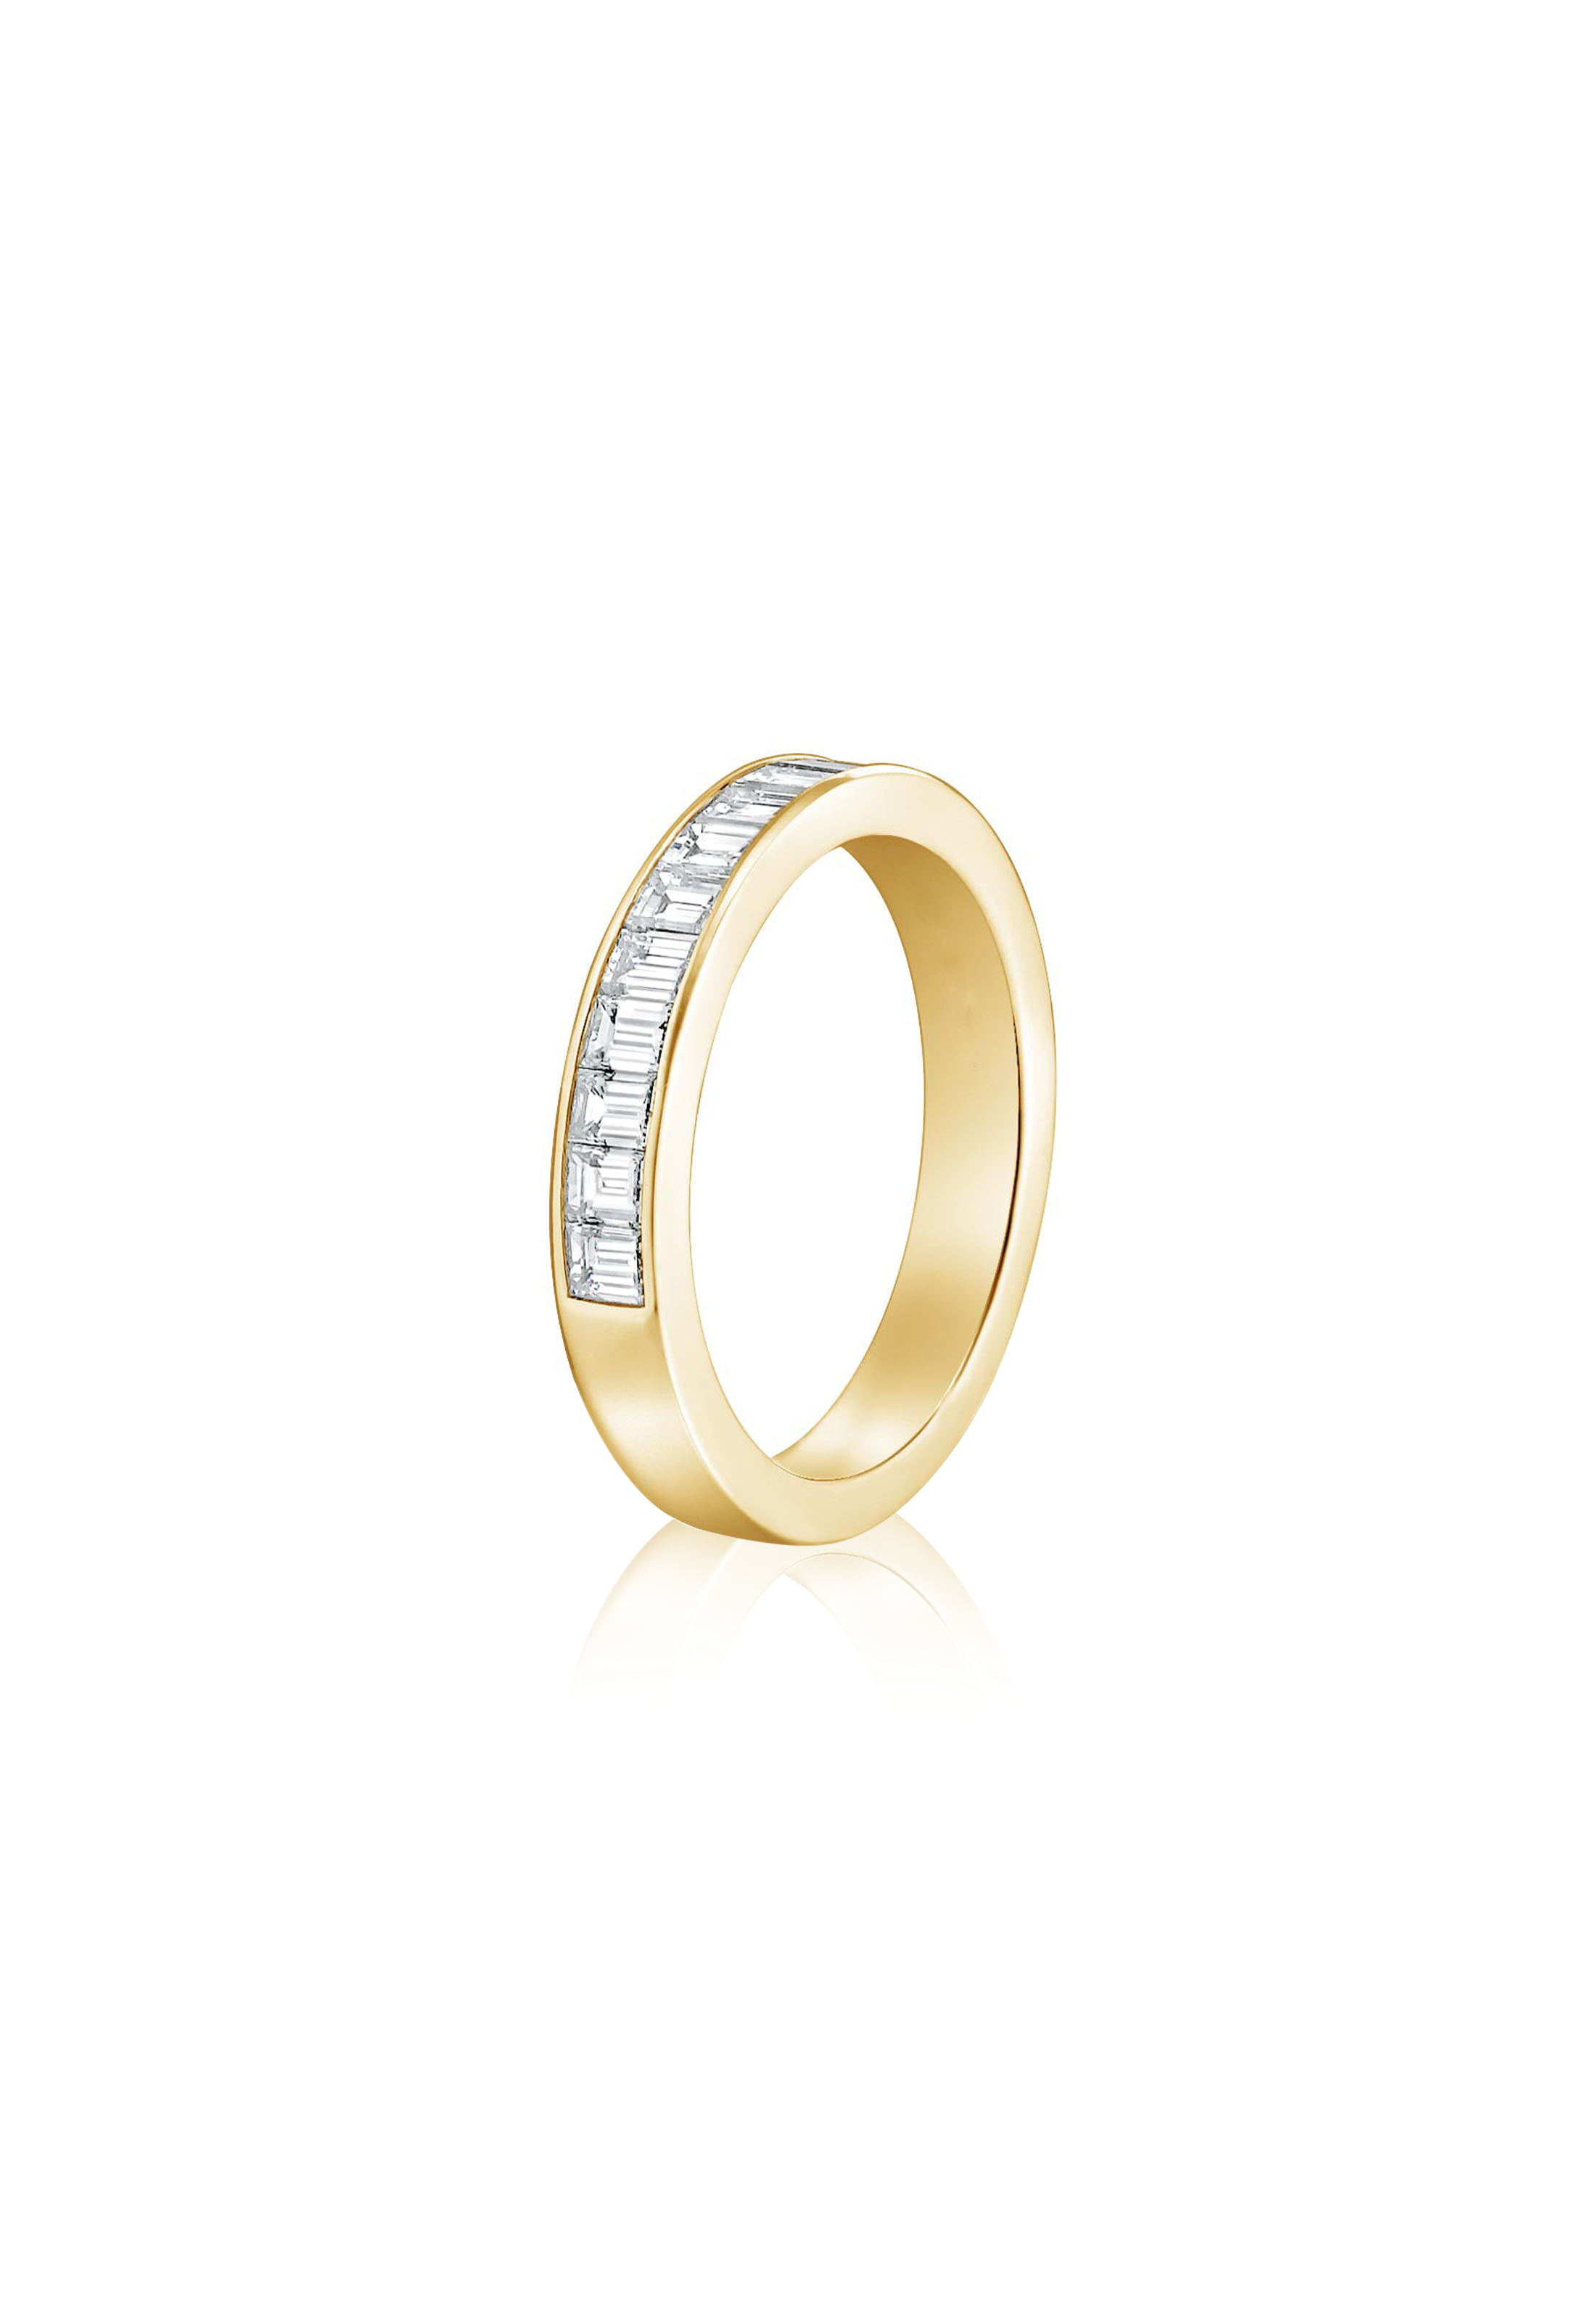 1 Row Channel Set Diamond Solid Gold Ring (Halfway) - Fenom & Co.